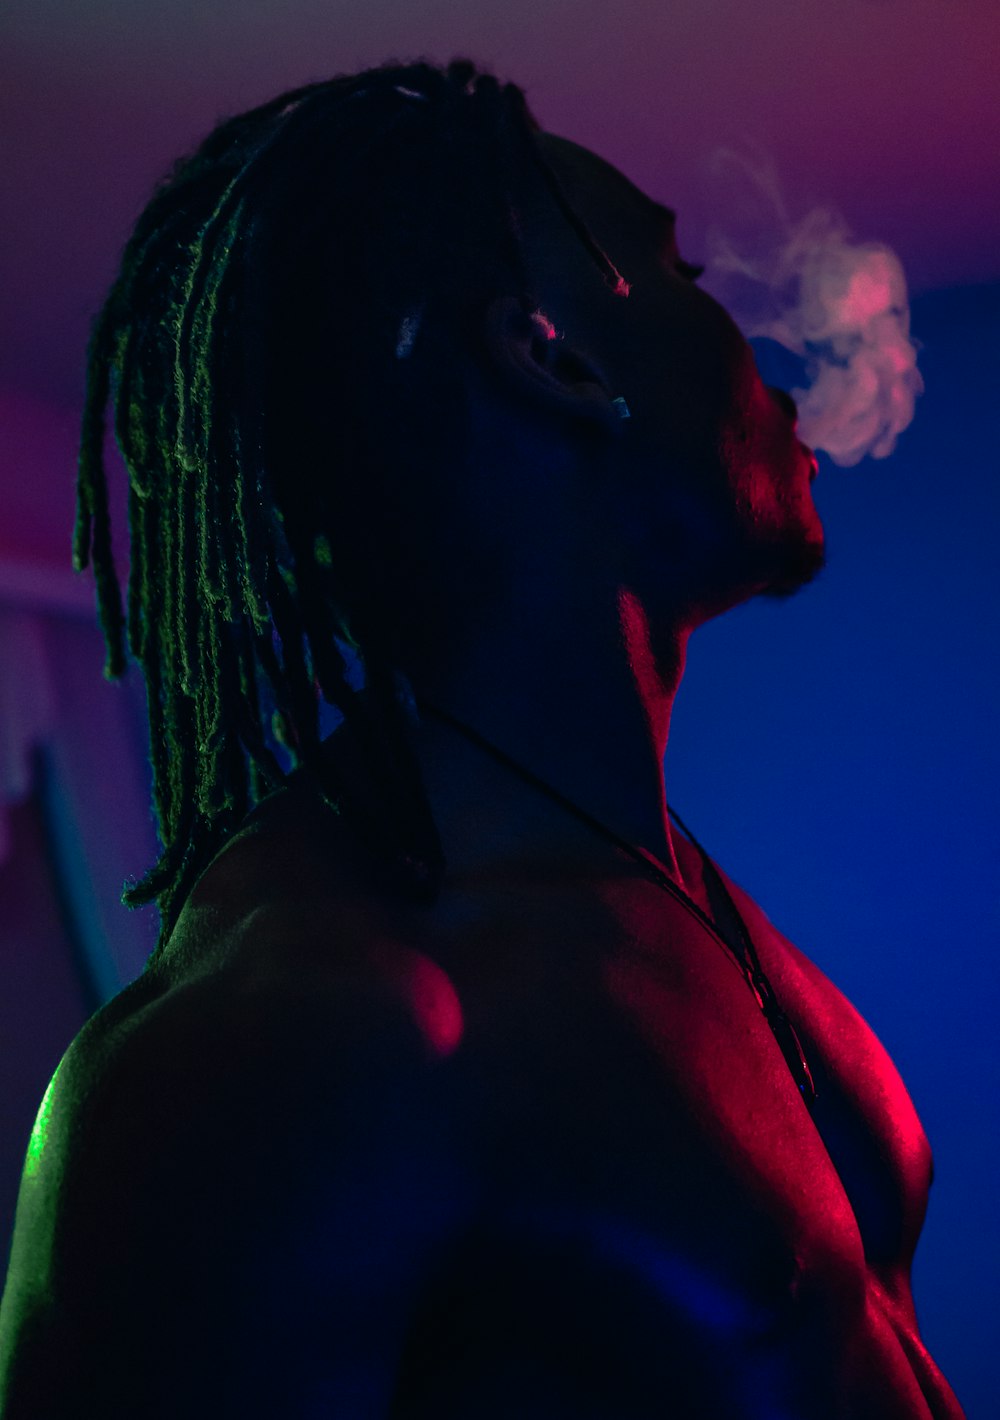 topless man smoking inside dark room